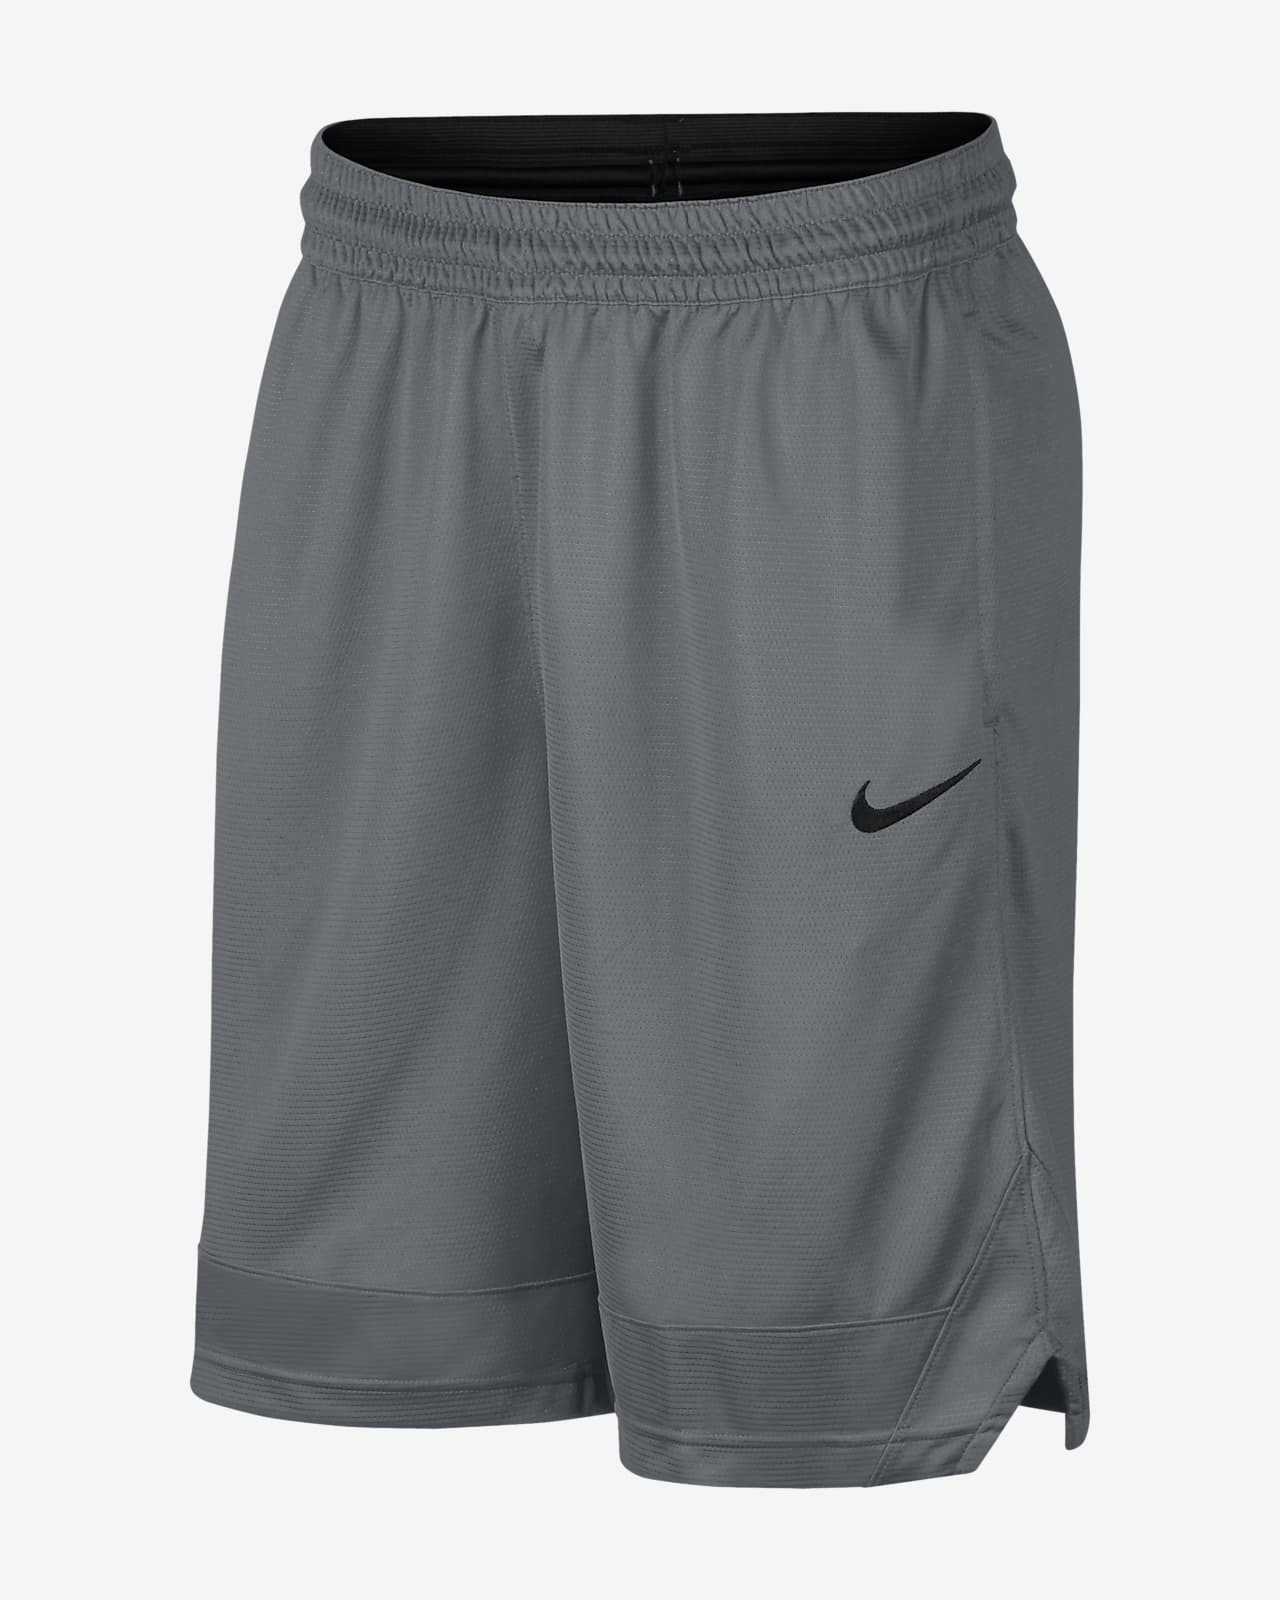 Shorts de básquetbol para hombre Nike Dri-FIT Icon. Nike.com